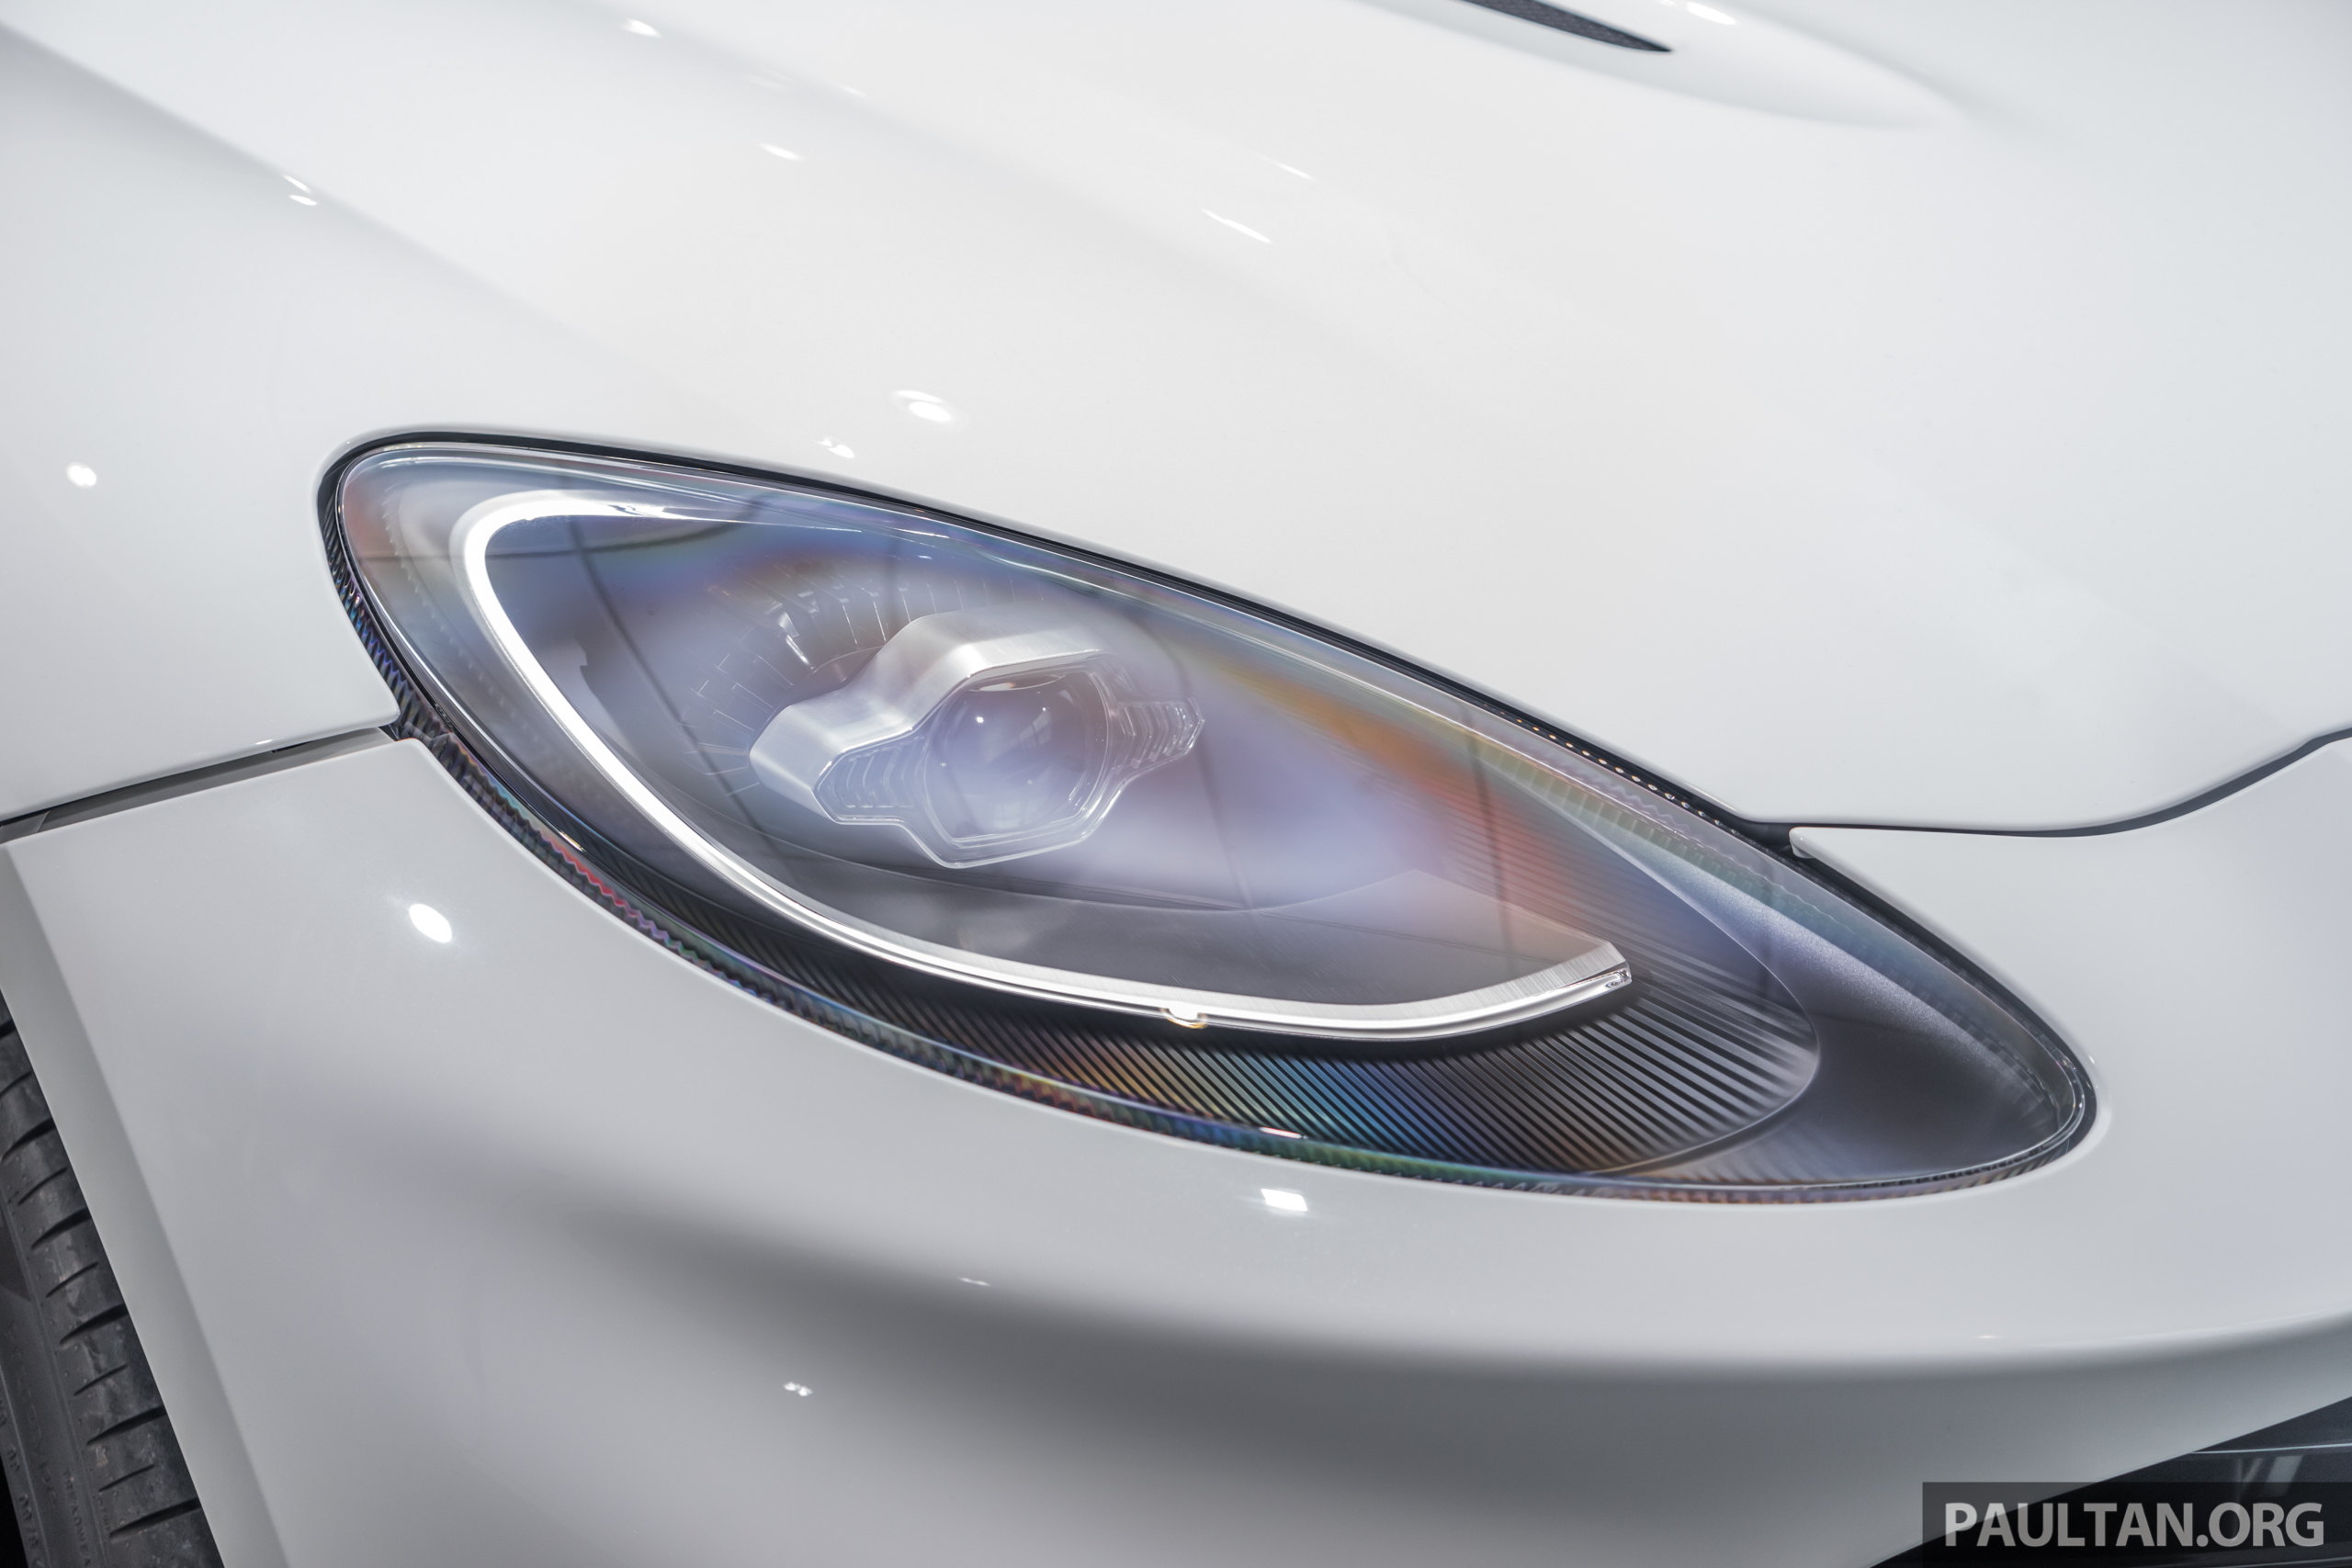 https://s1.paultan.org/image/2019/12/Aston-Martin-DBX-8.jpg